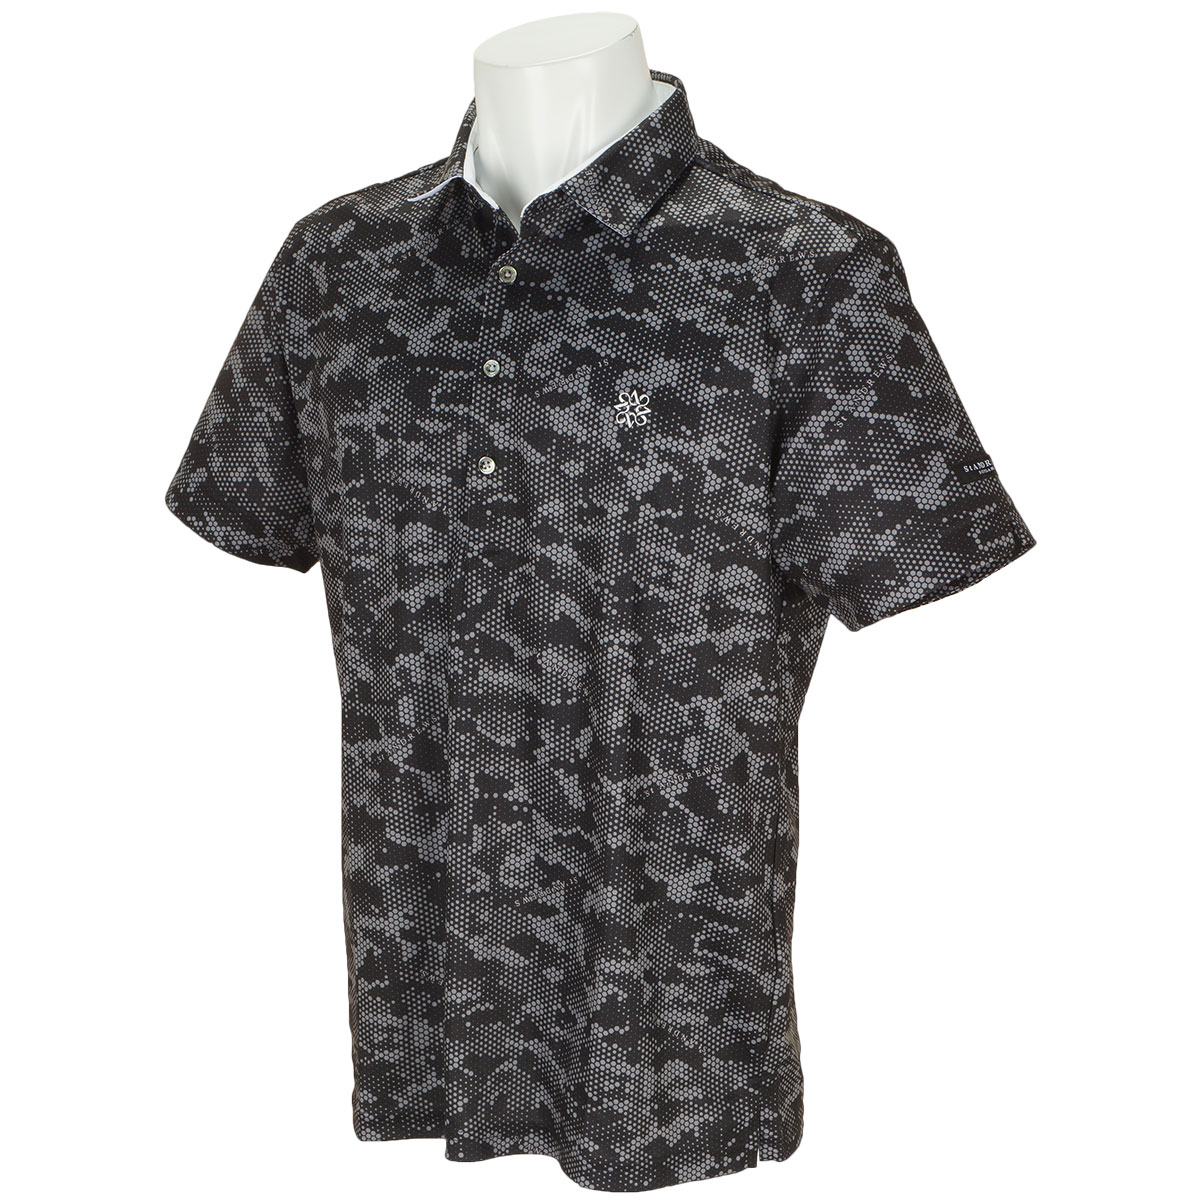  COOLMAX 鹿の子デジタルカモロゴプリント 半袖ポロシャツ 